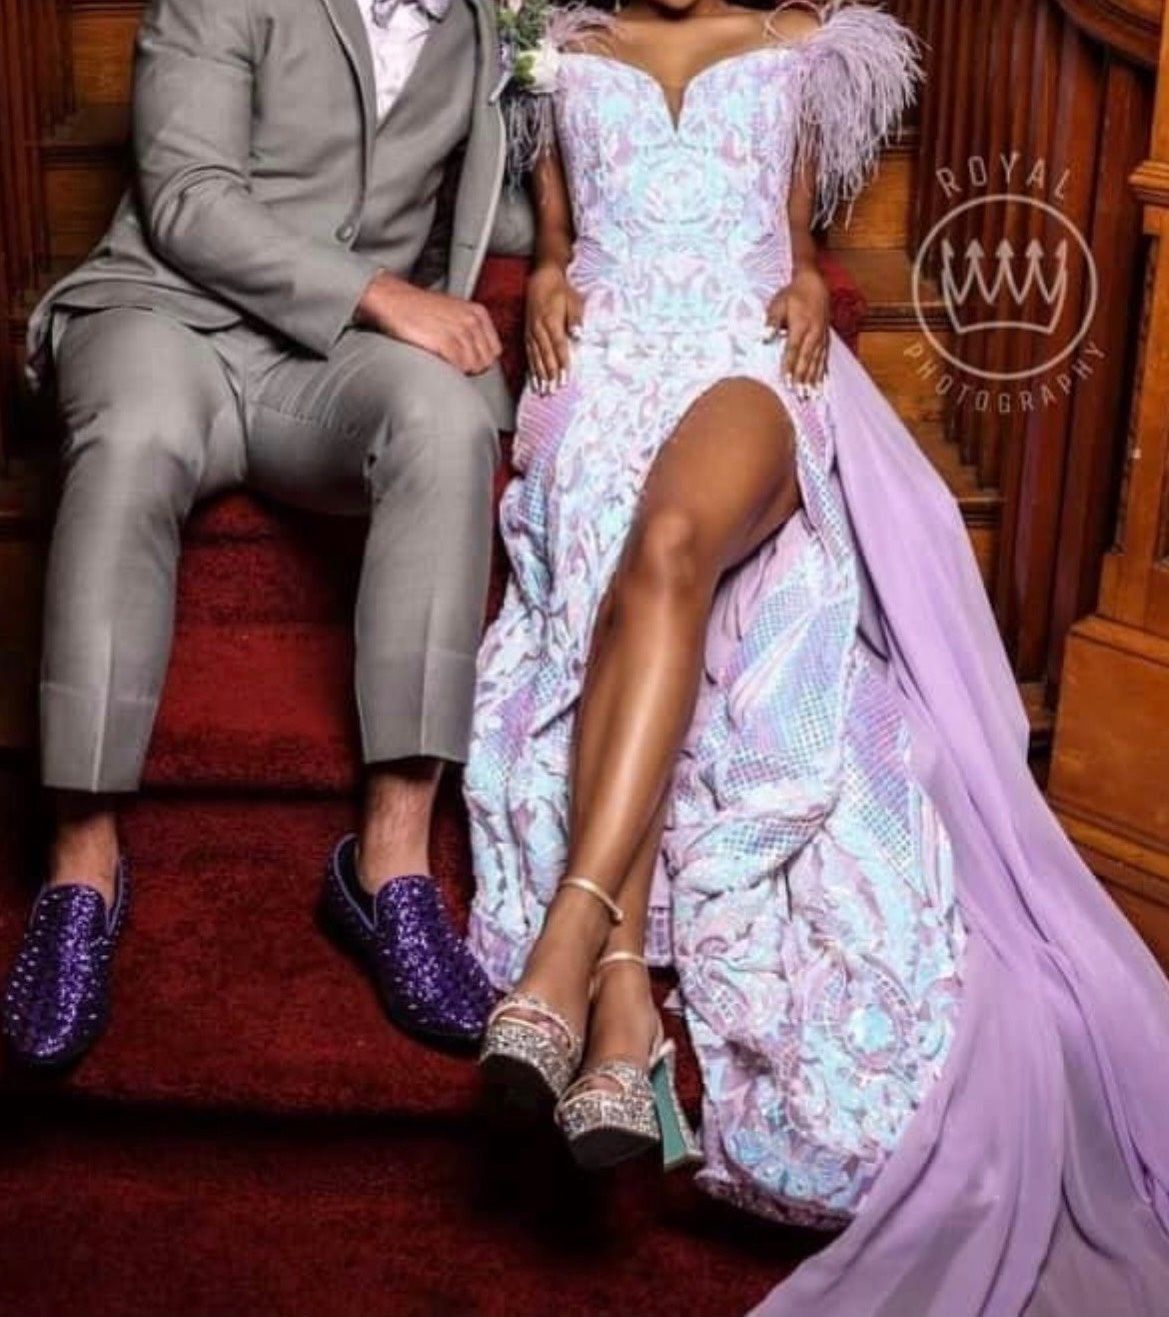 Size 6 Prom Off The Shoulder Purple Side Slit Dress on Queenly